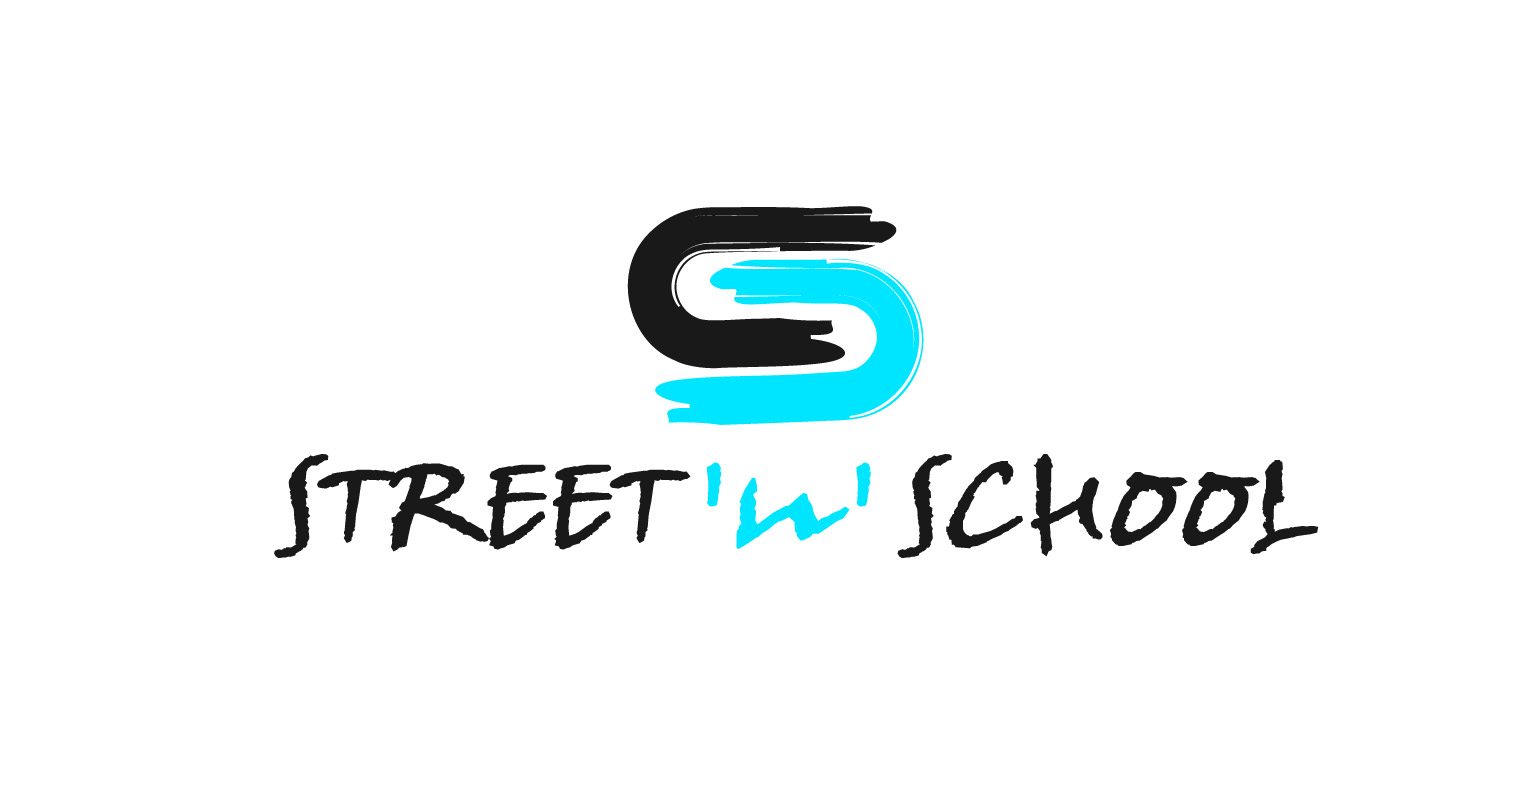 Návrh loga STREET and SCHOOL